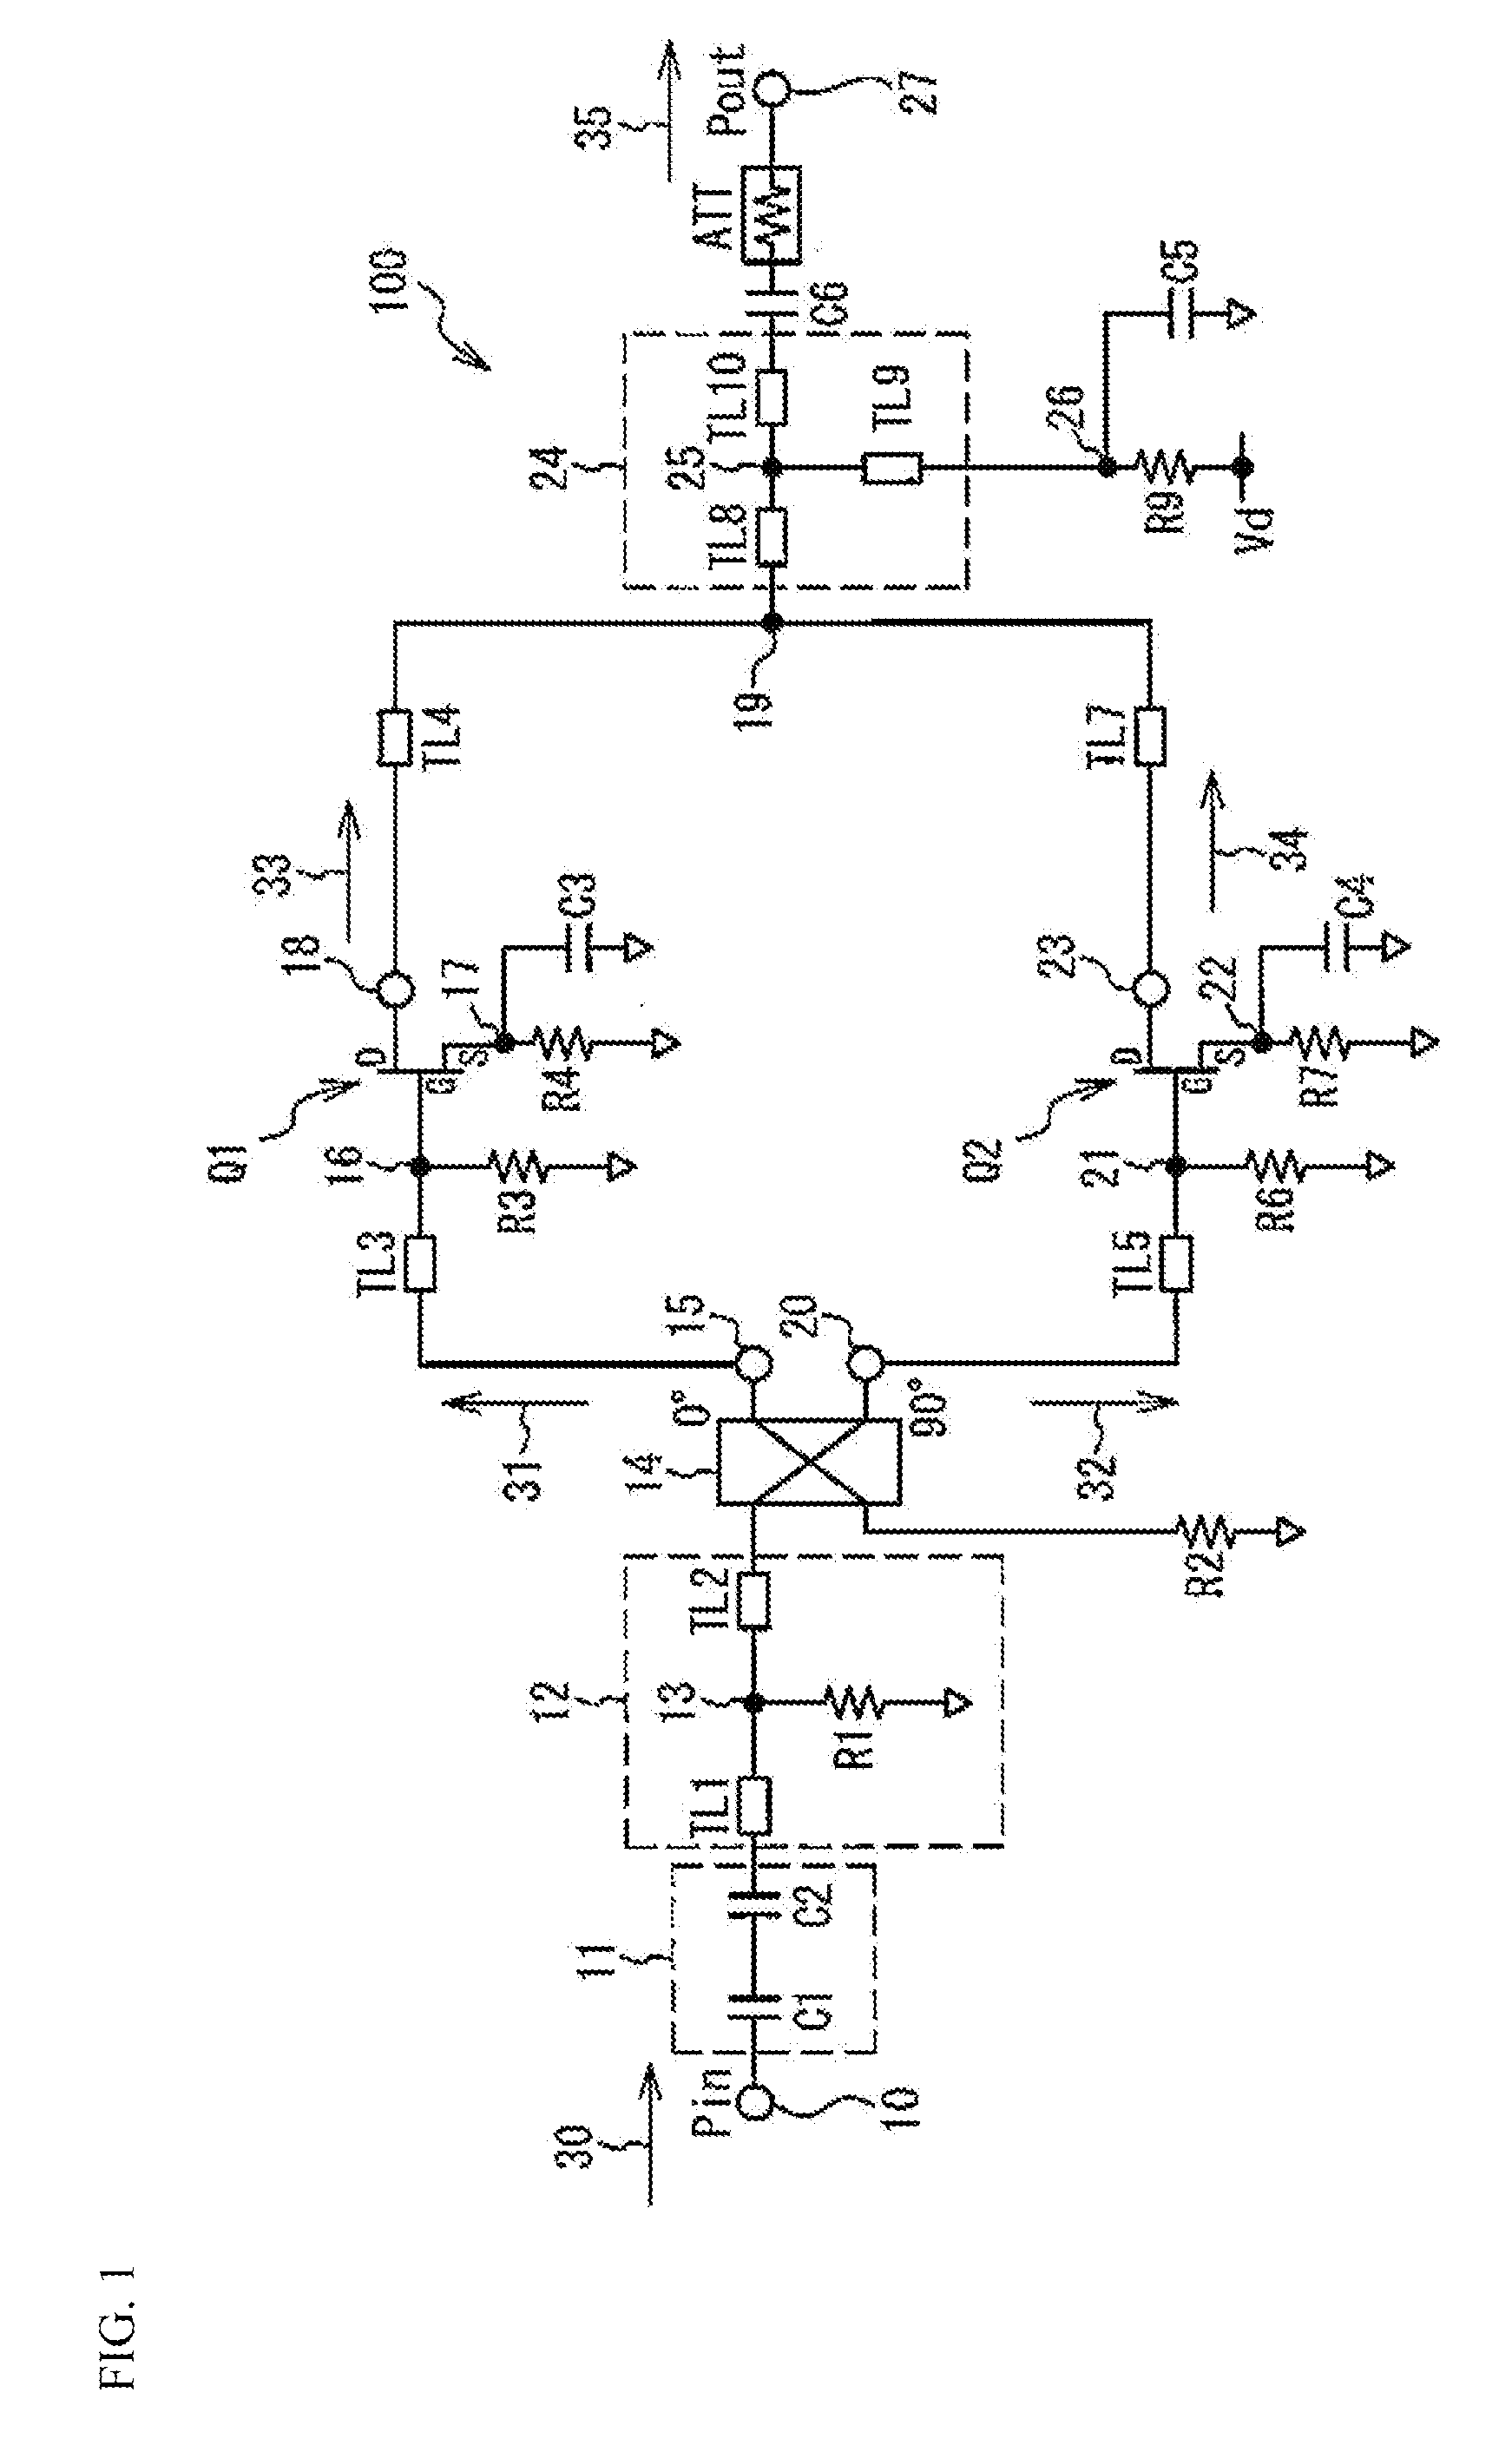 Multiplier circuit